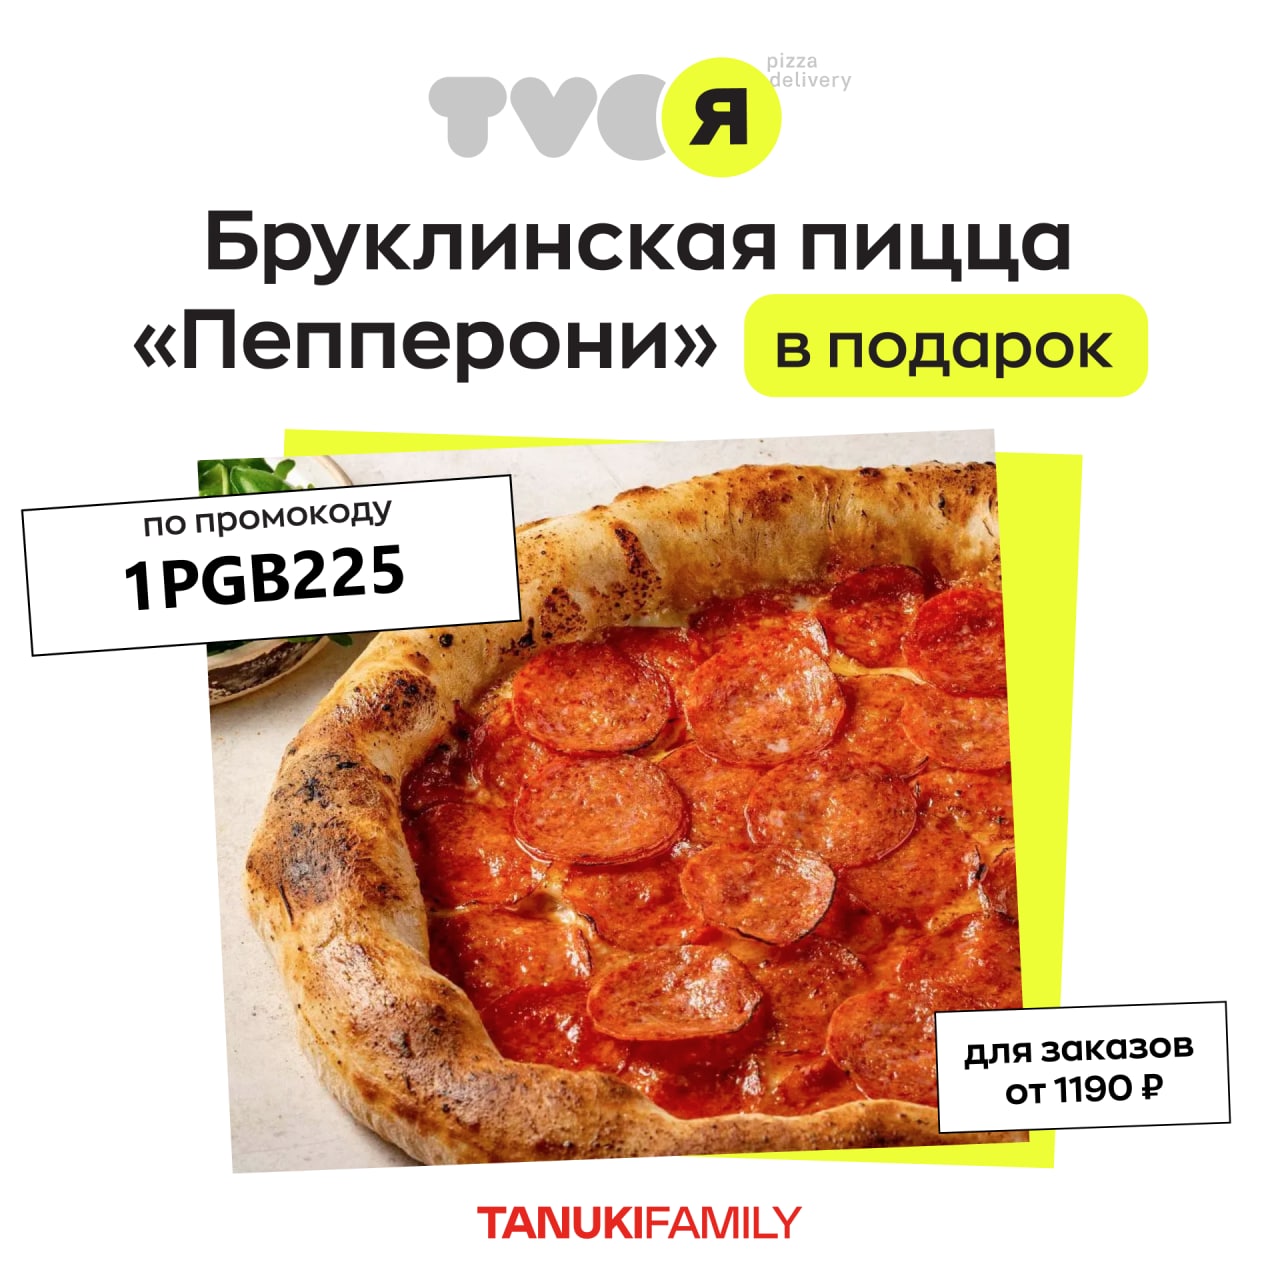 технологические карты на пиццу пепперони фото 109